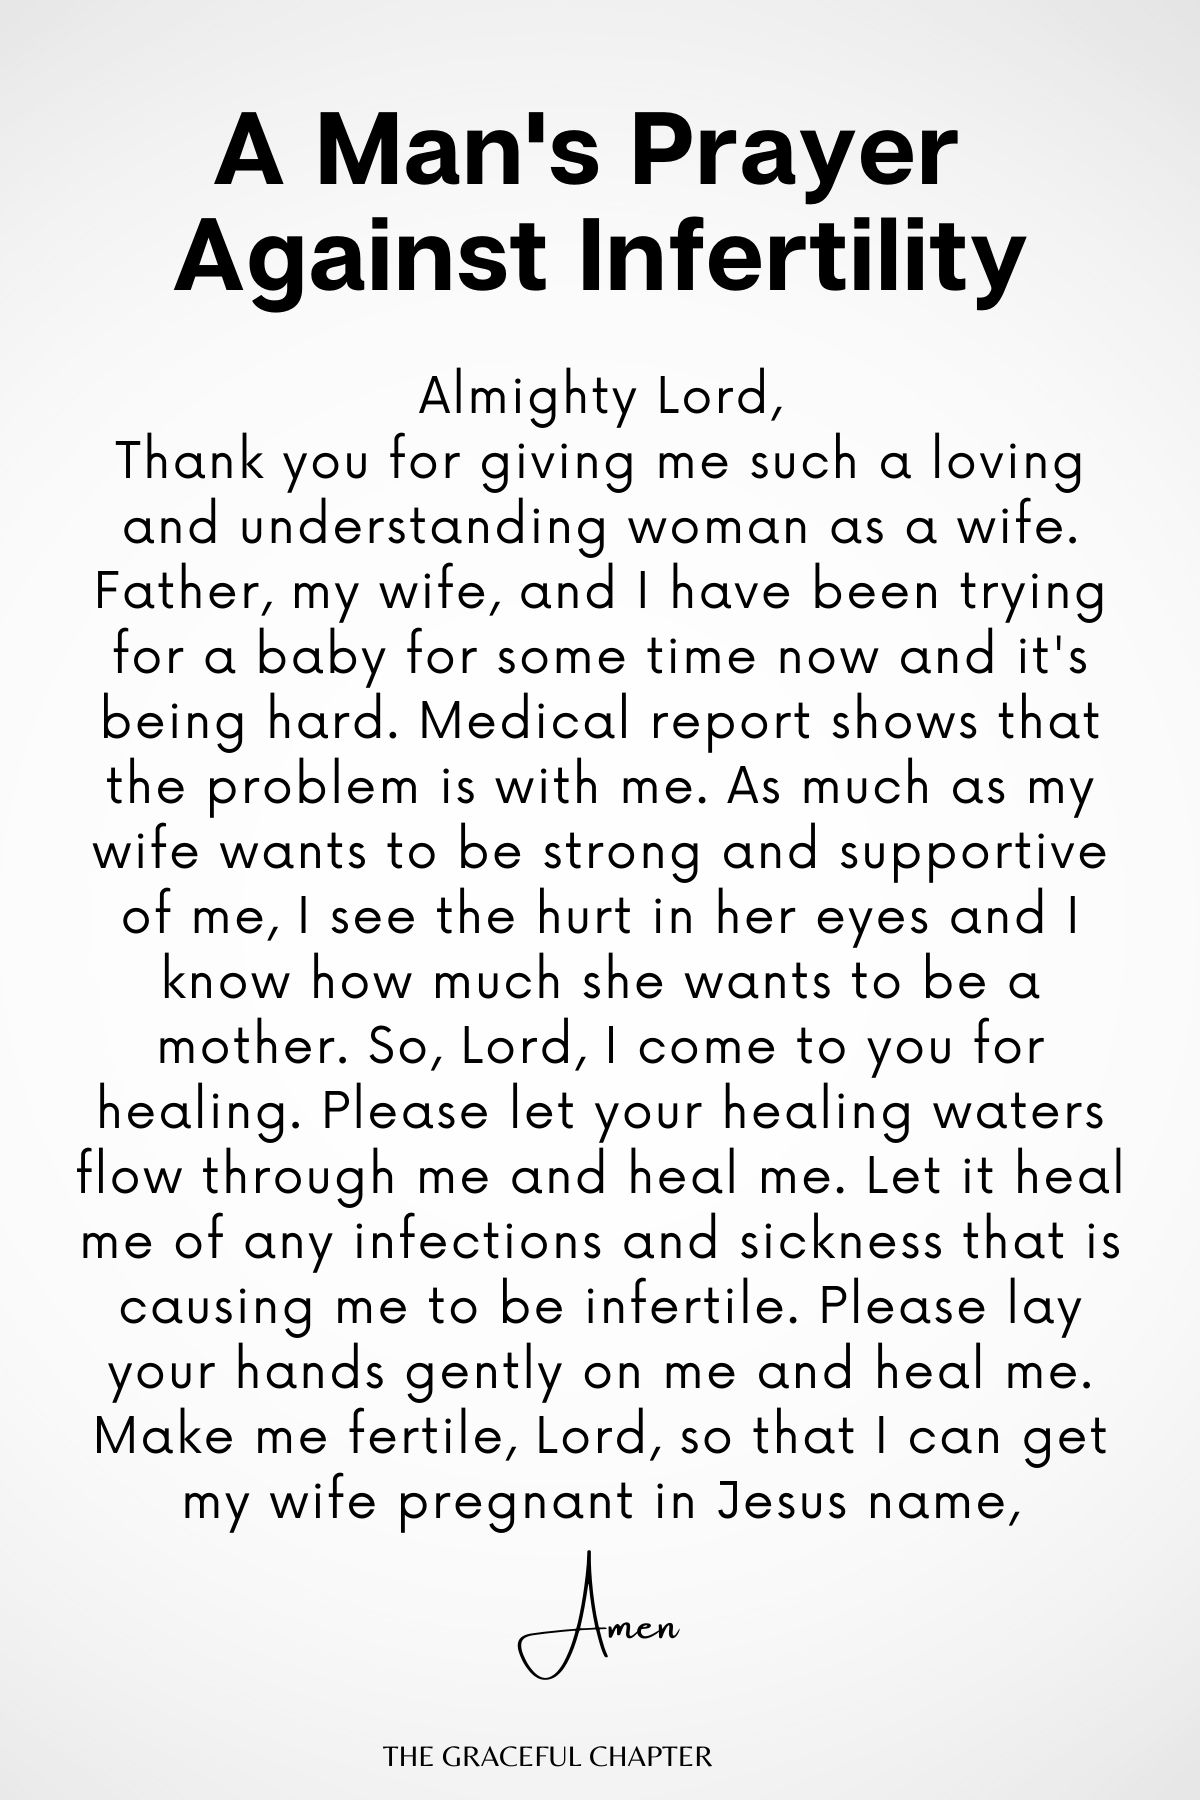 A man's prayer against infertility